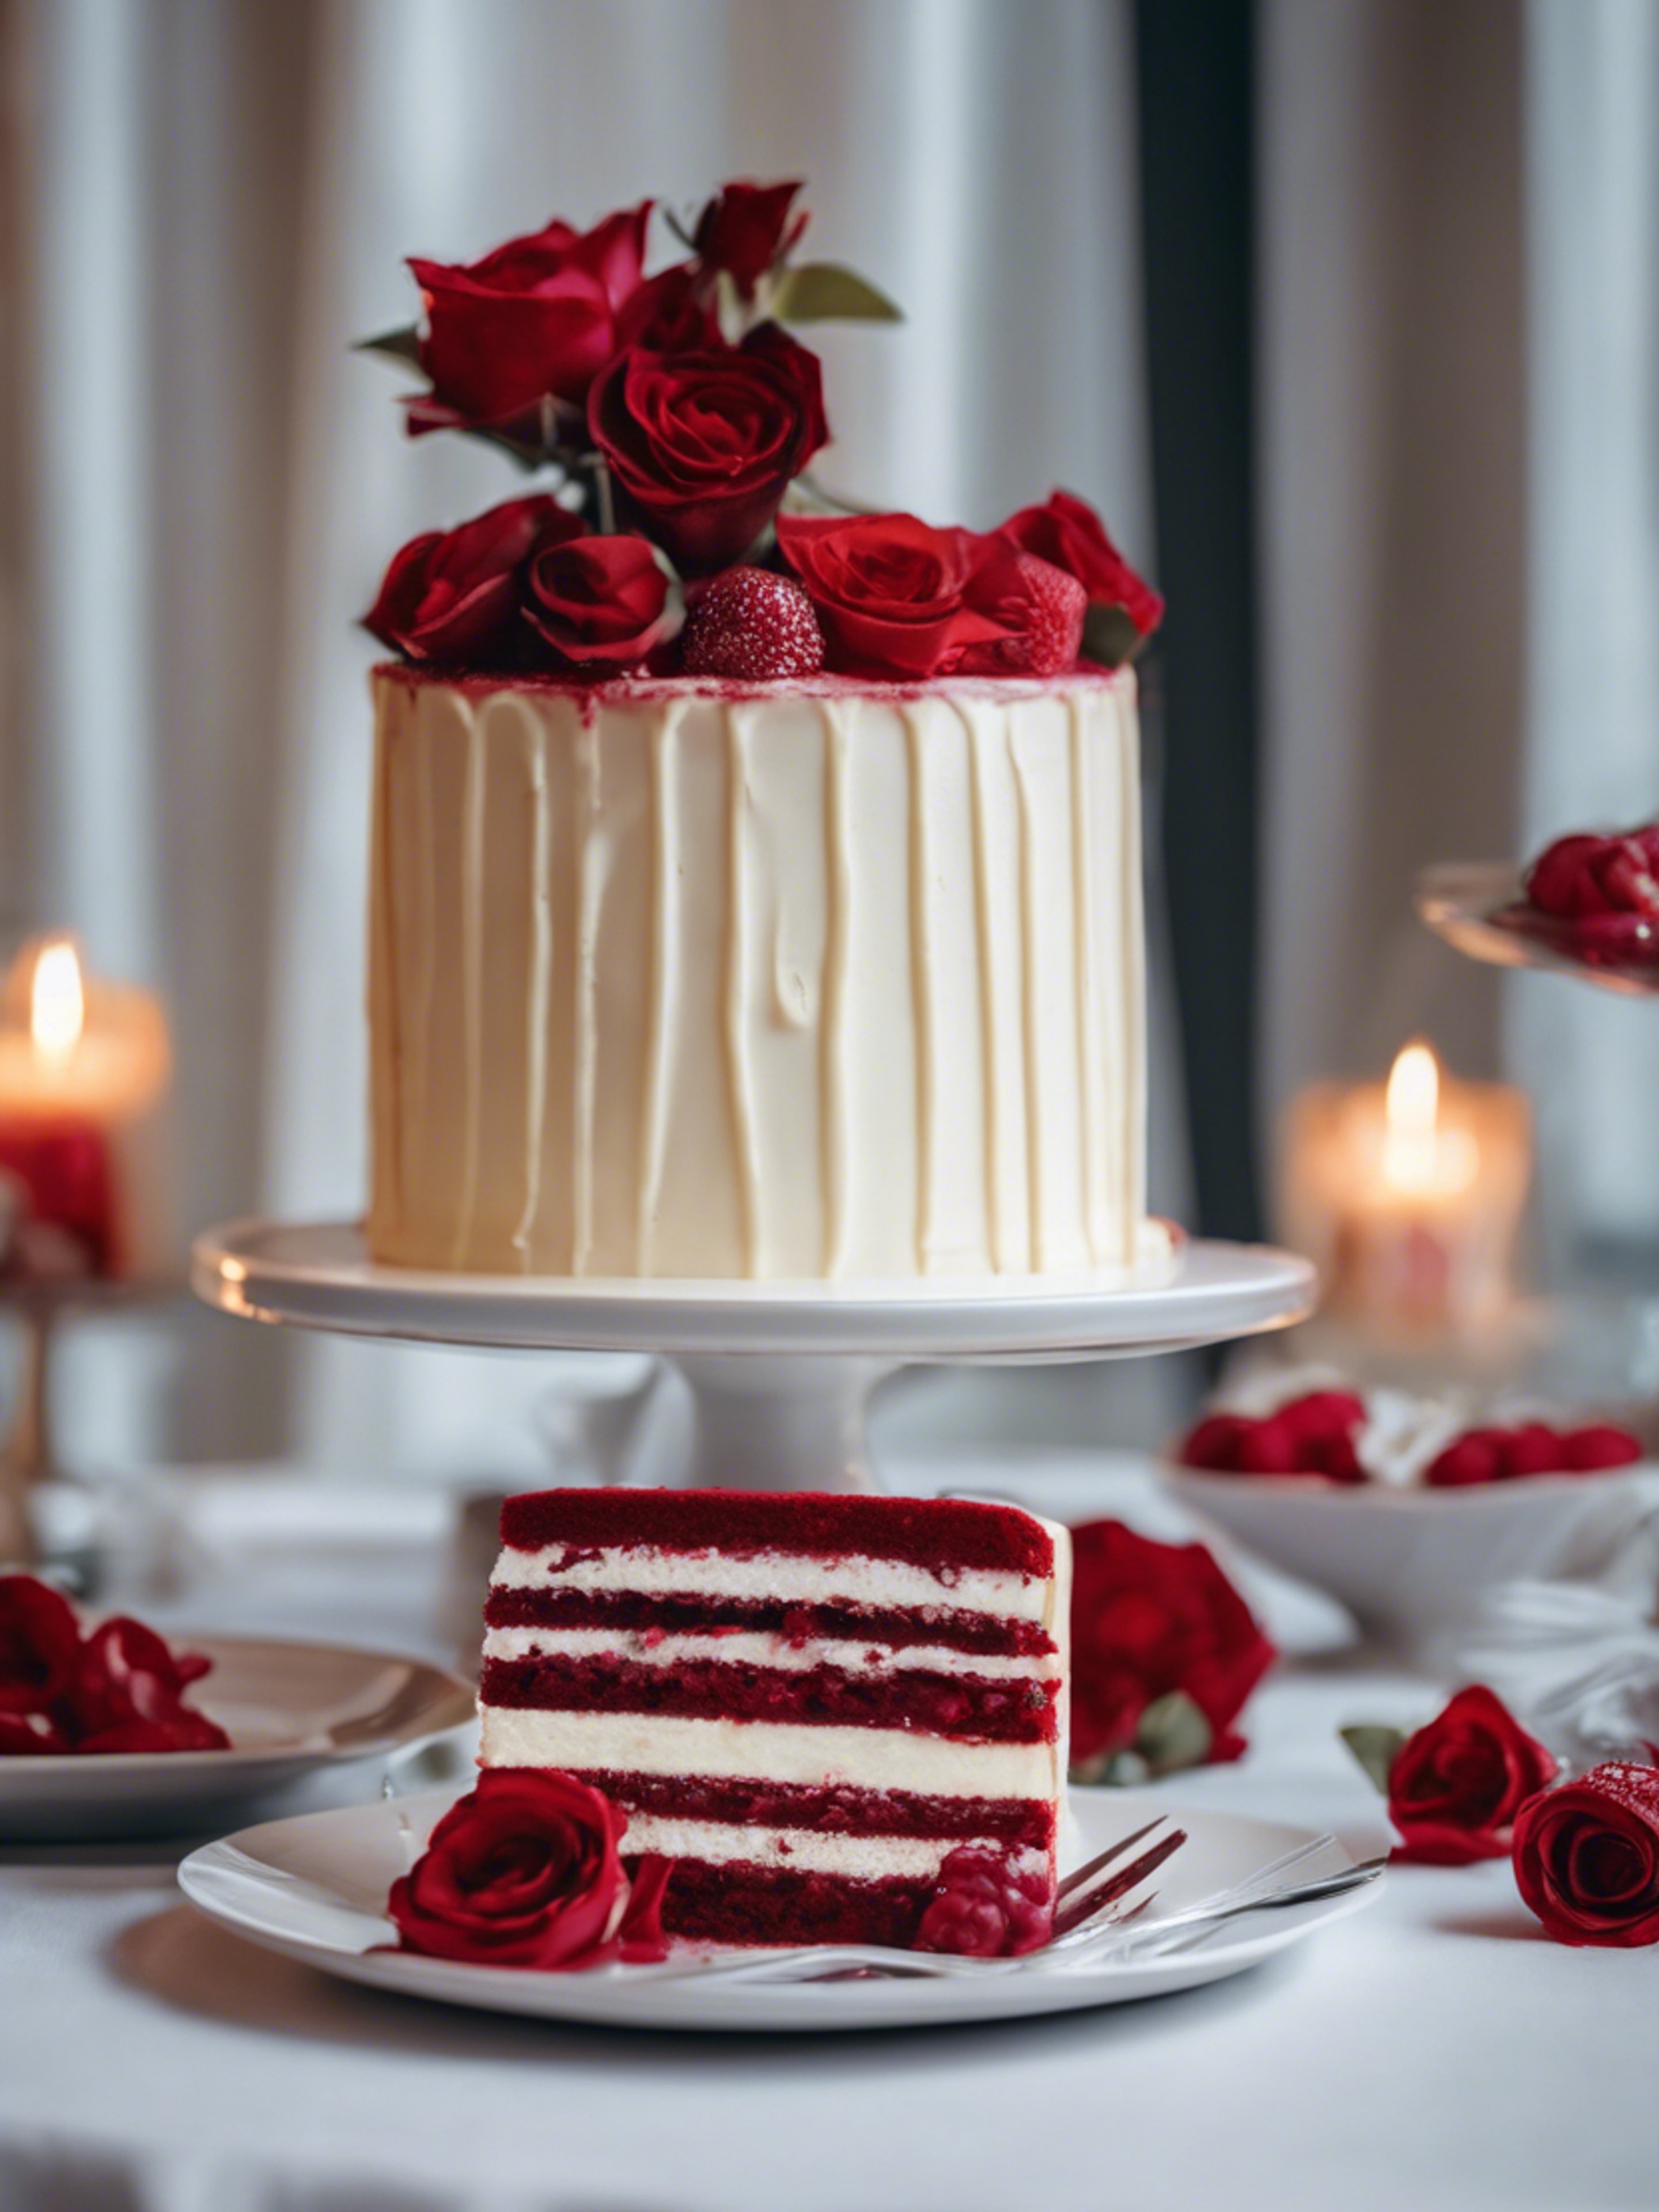 A scrumptious red velvet and white cream layered cake on a dessert table. duvar kağıdı[9c378ca78b014f2daafb]